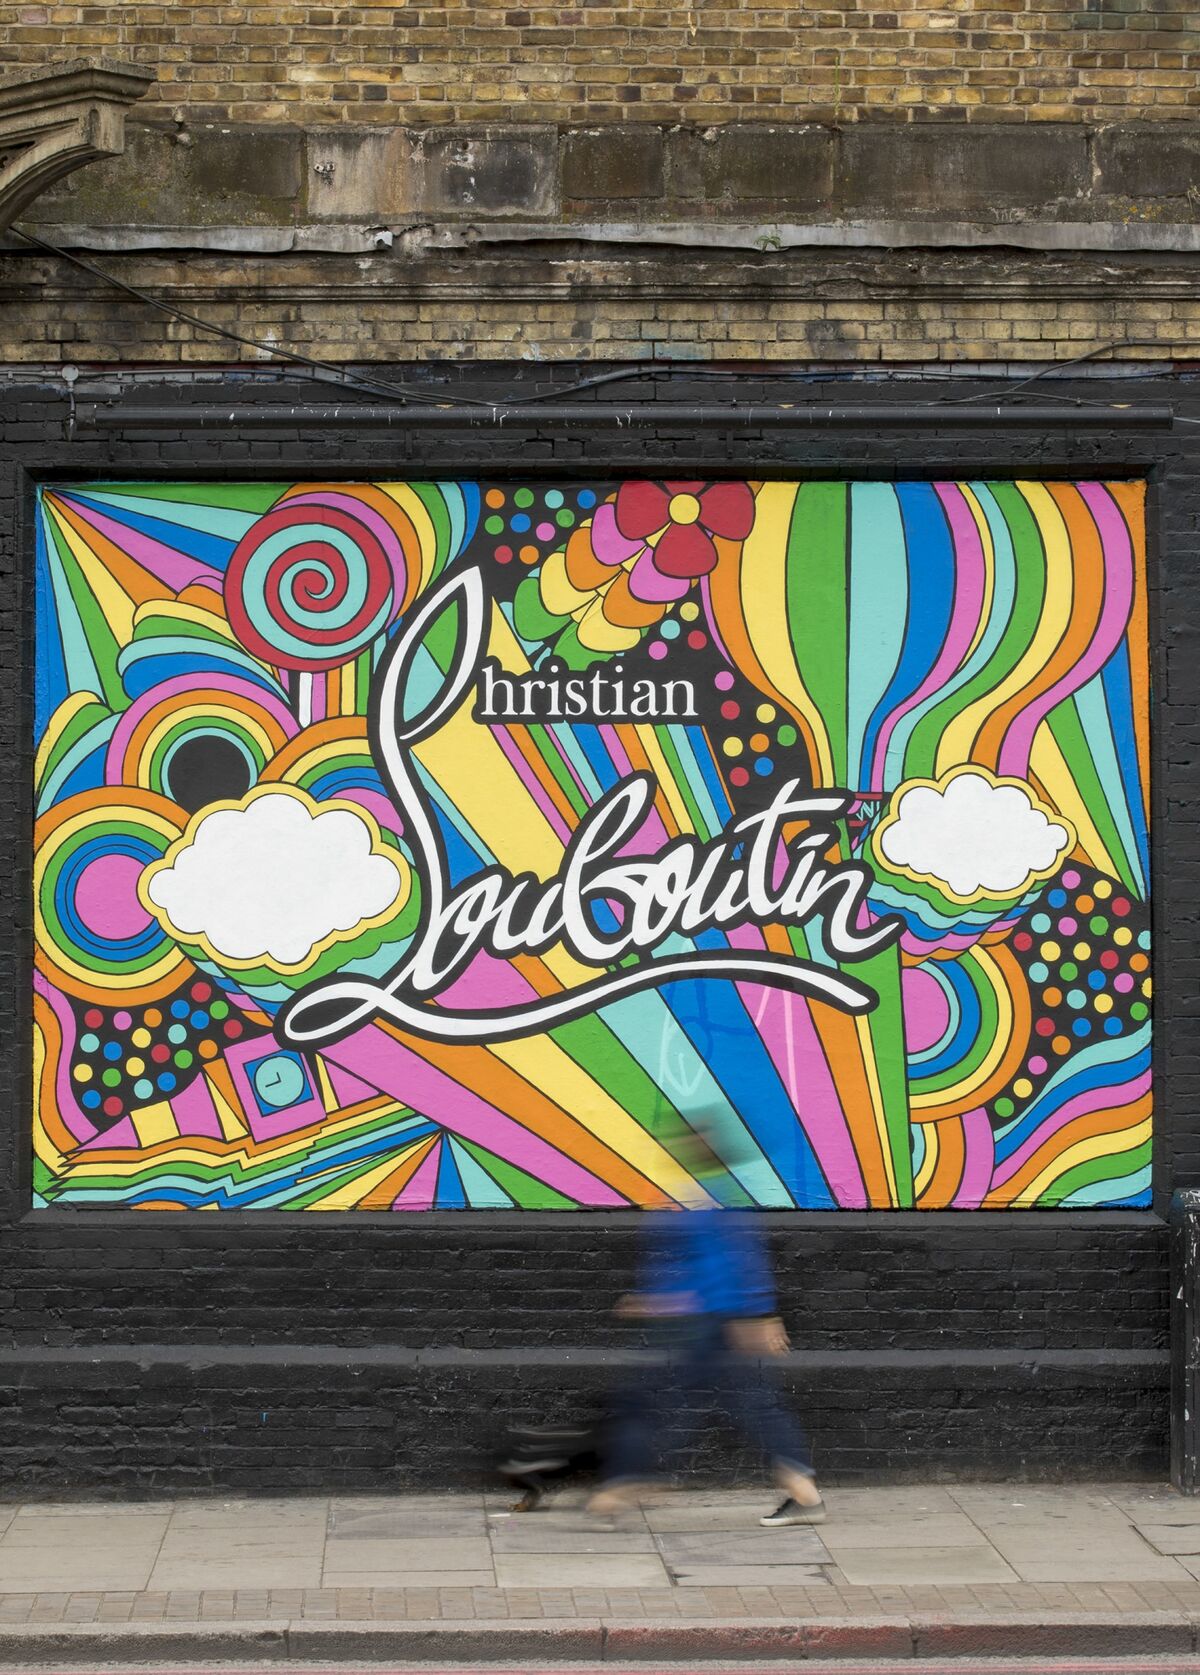 Luxury Brands Gucci Louboutin Graffiti Ads Take Over Street Art  Bloomberg